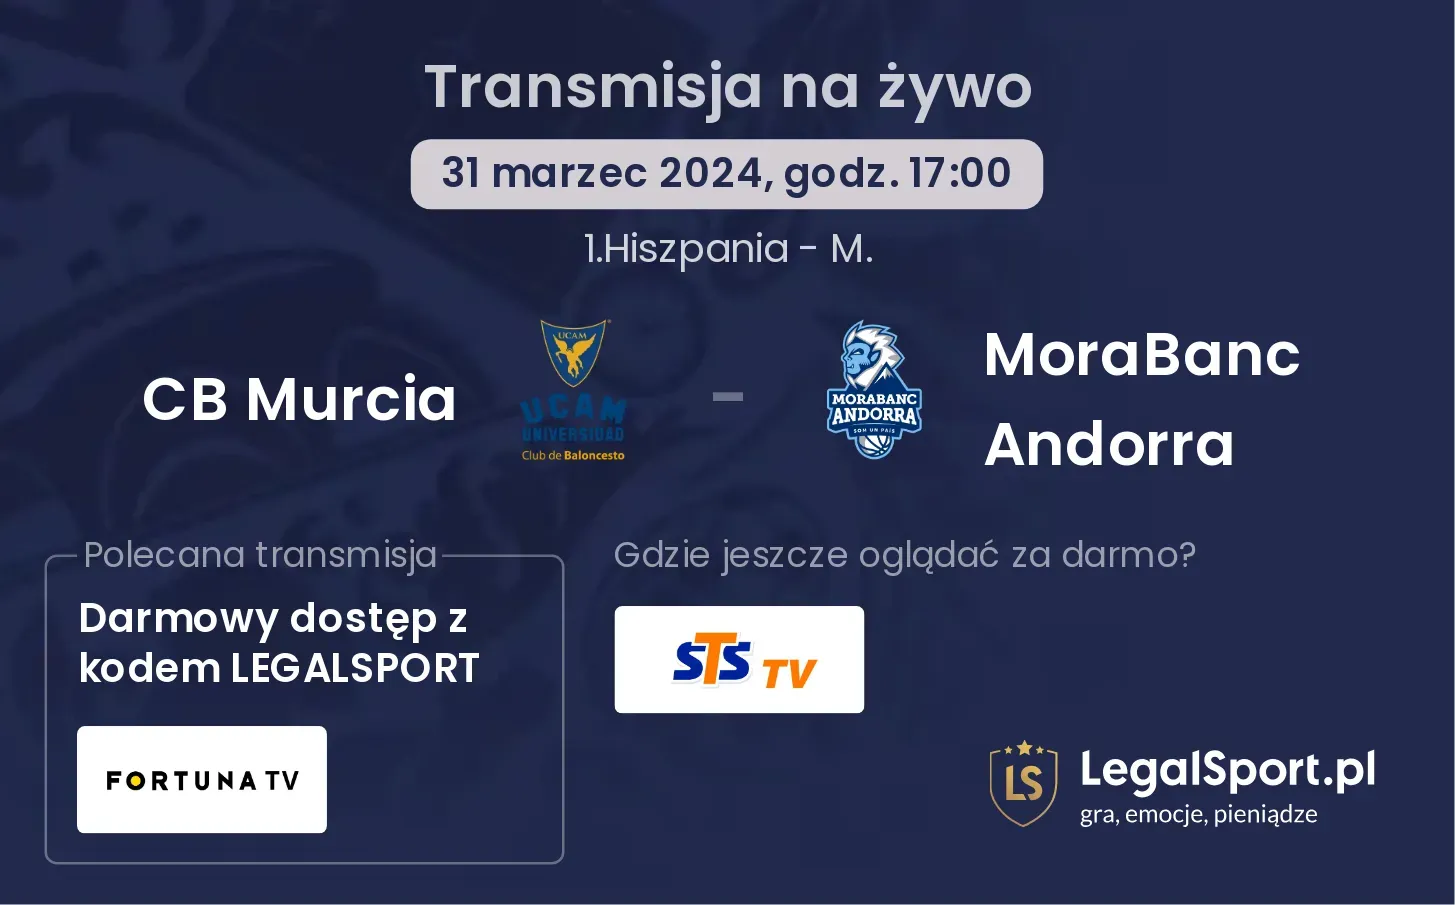 CB Murcia - MoraBanc Andorra transmisja na żywo